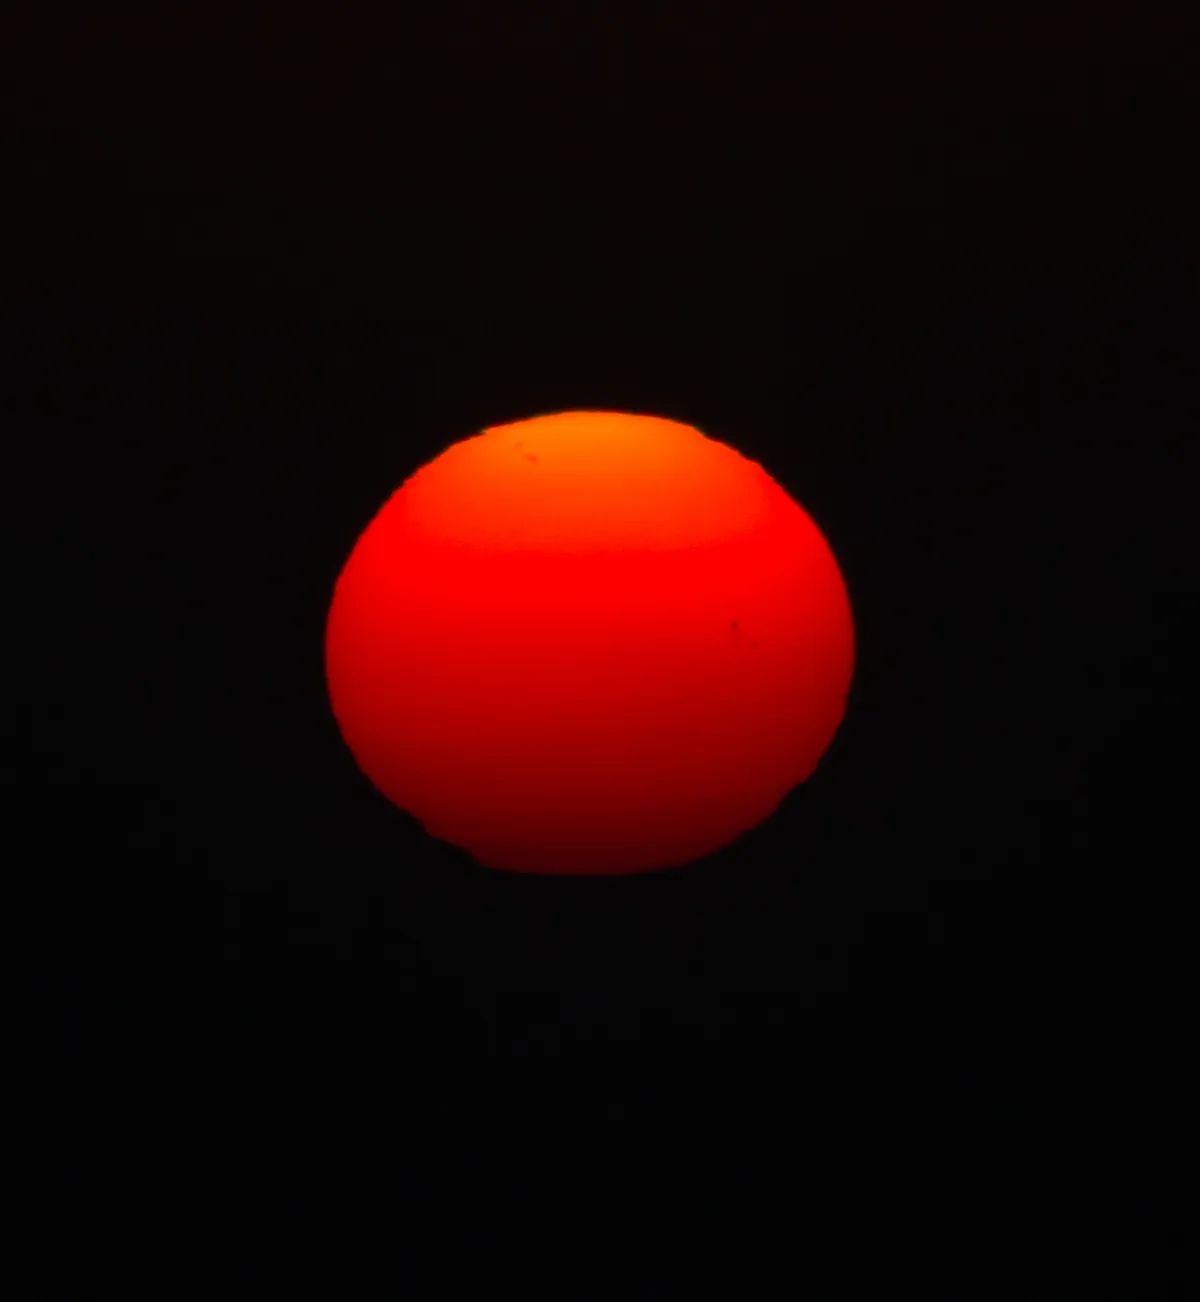 Sun Set Canon 50D by Brian.M.Johnson, Scotland, UK. Equipment: Canon 50D 200mm Lens